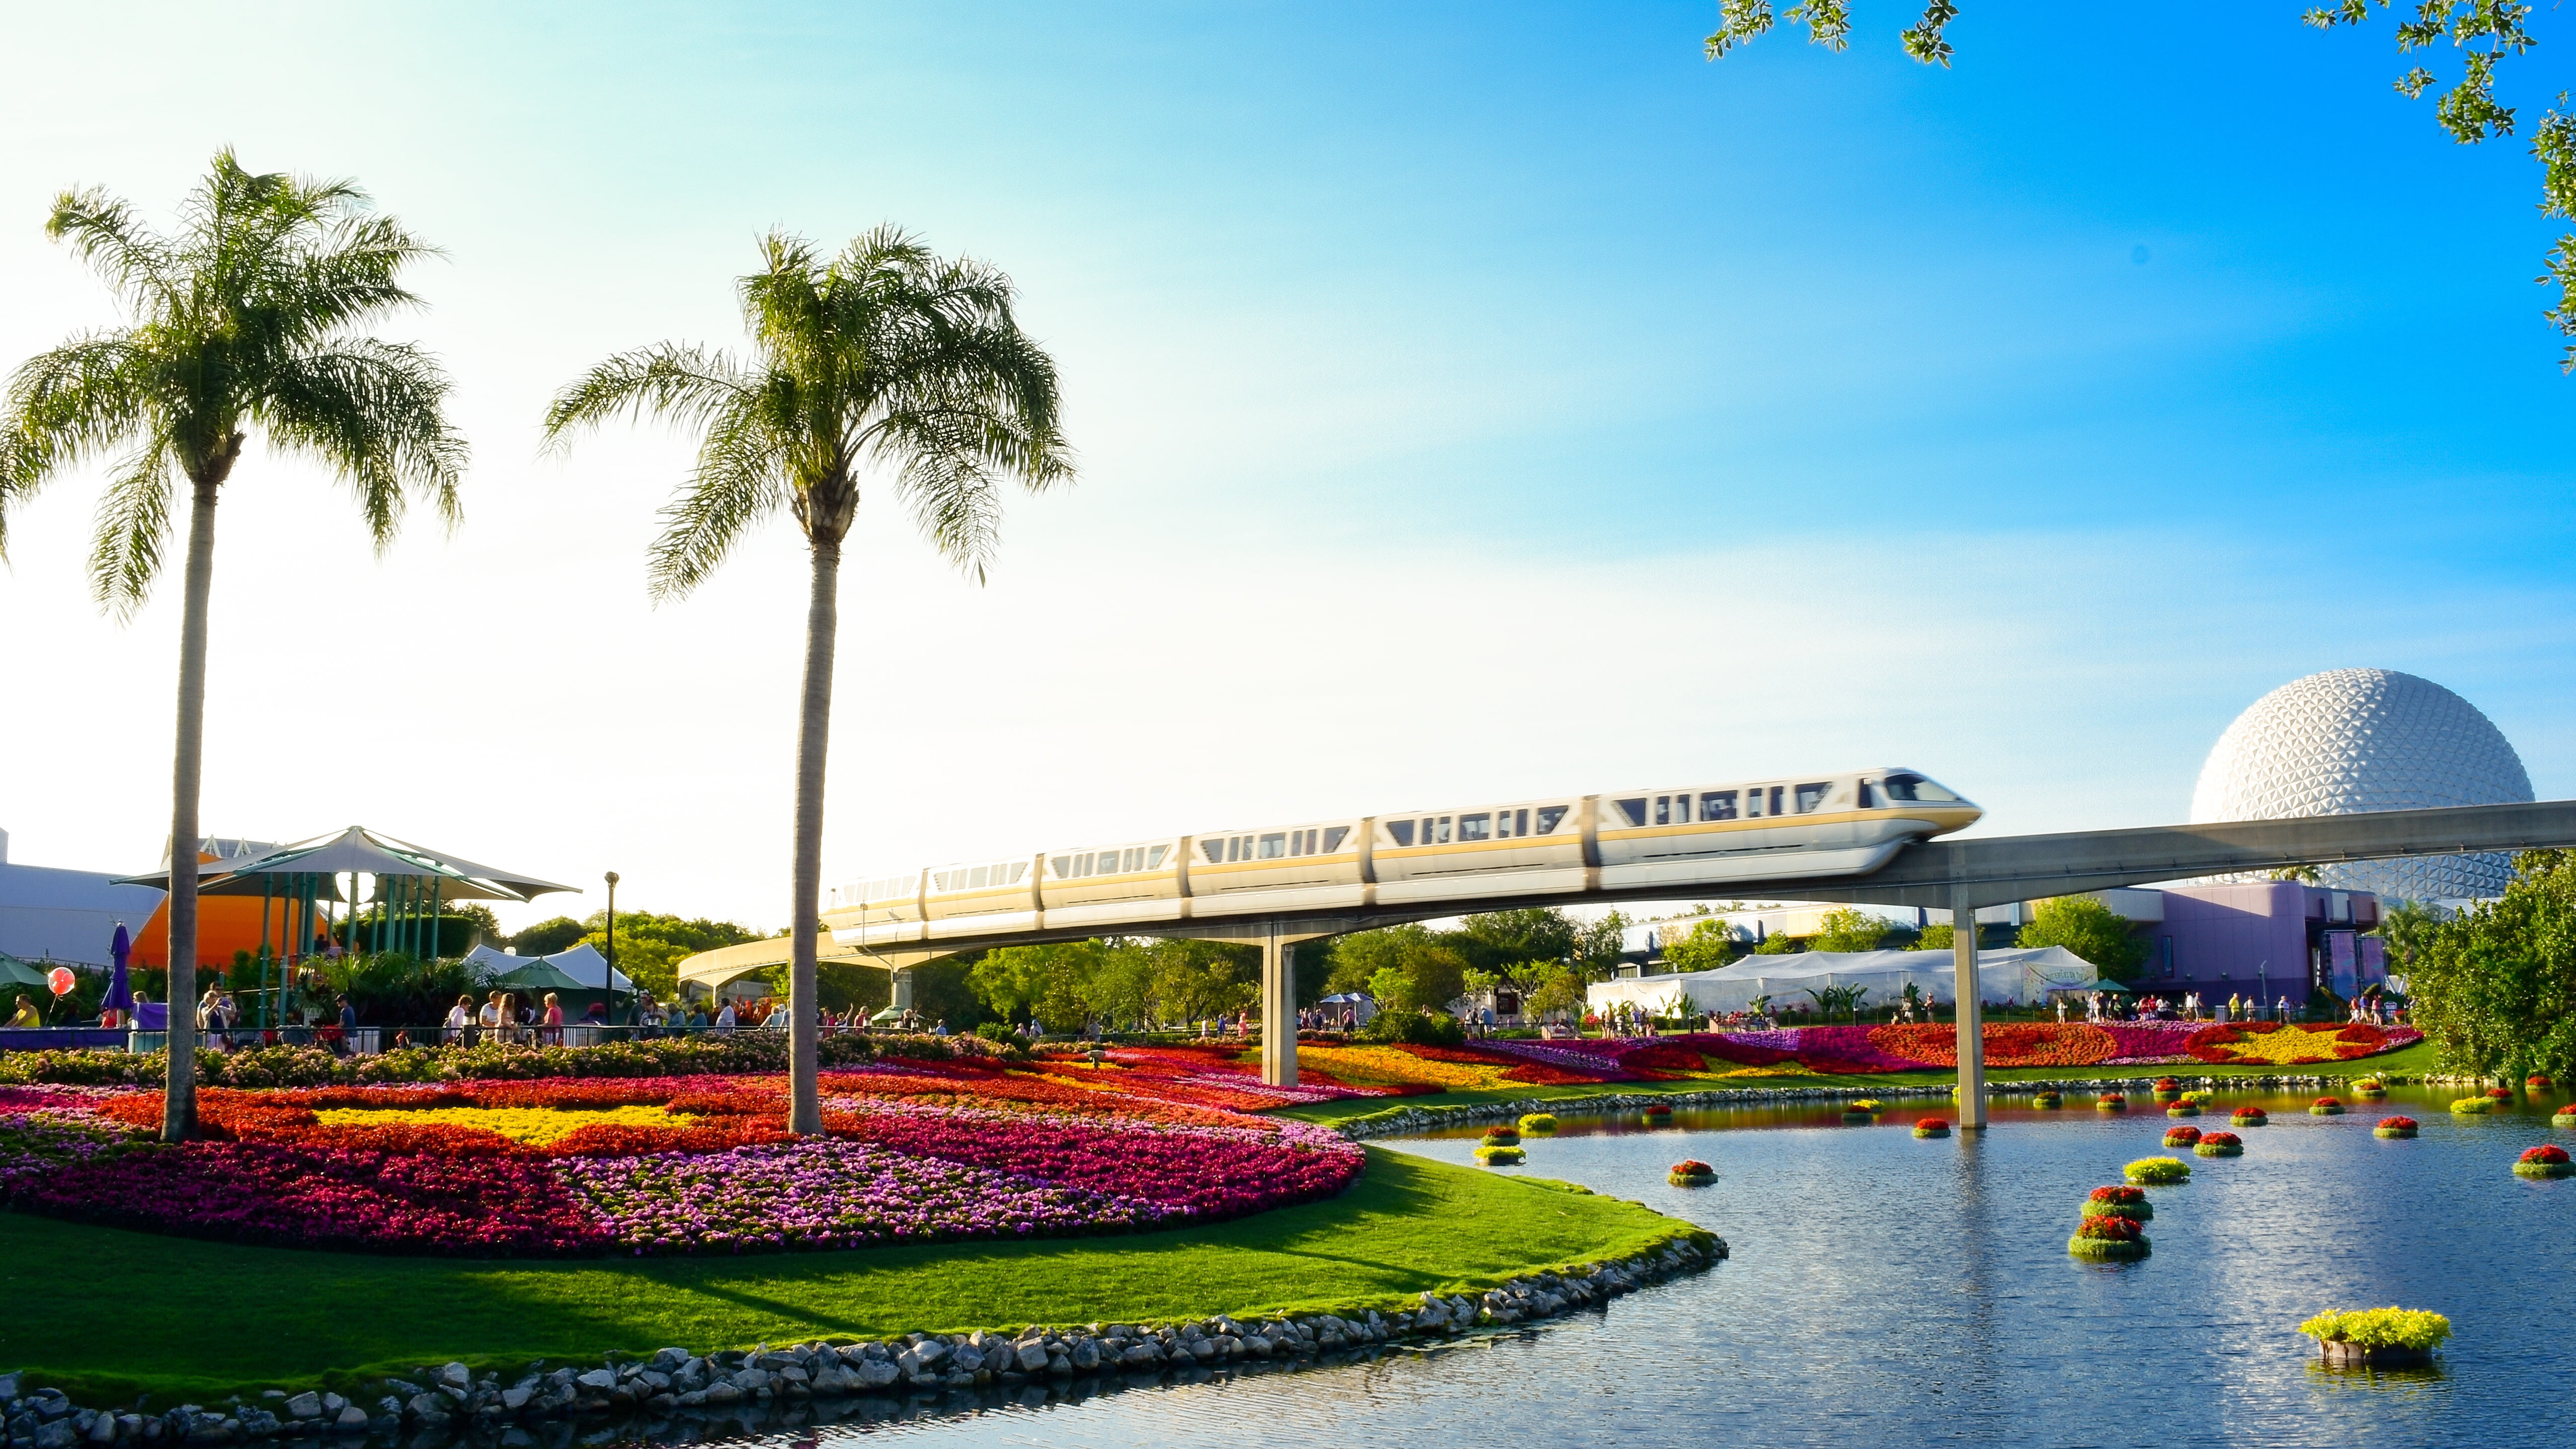 train on railway, parks, orlando, florida, fun, garden, flowers